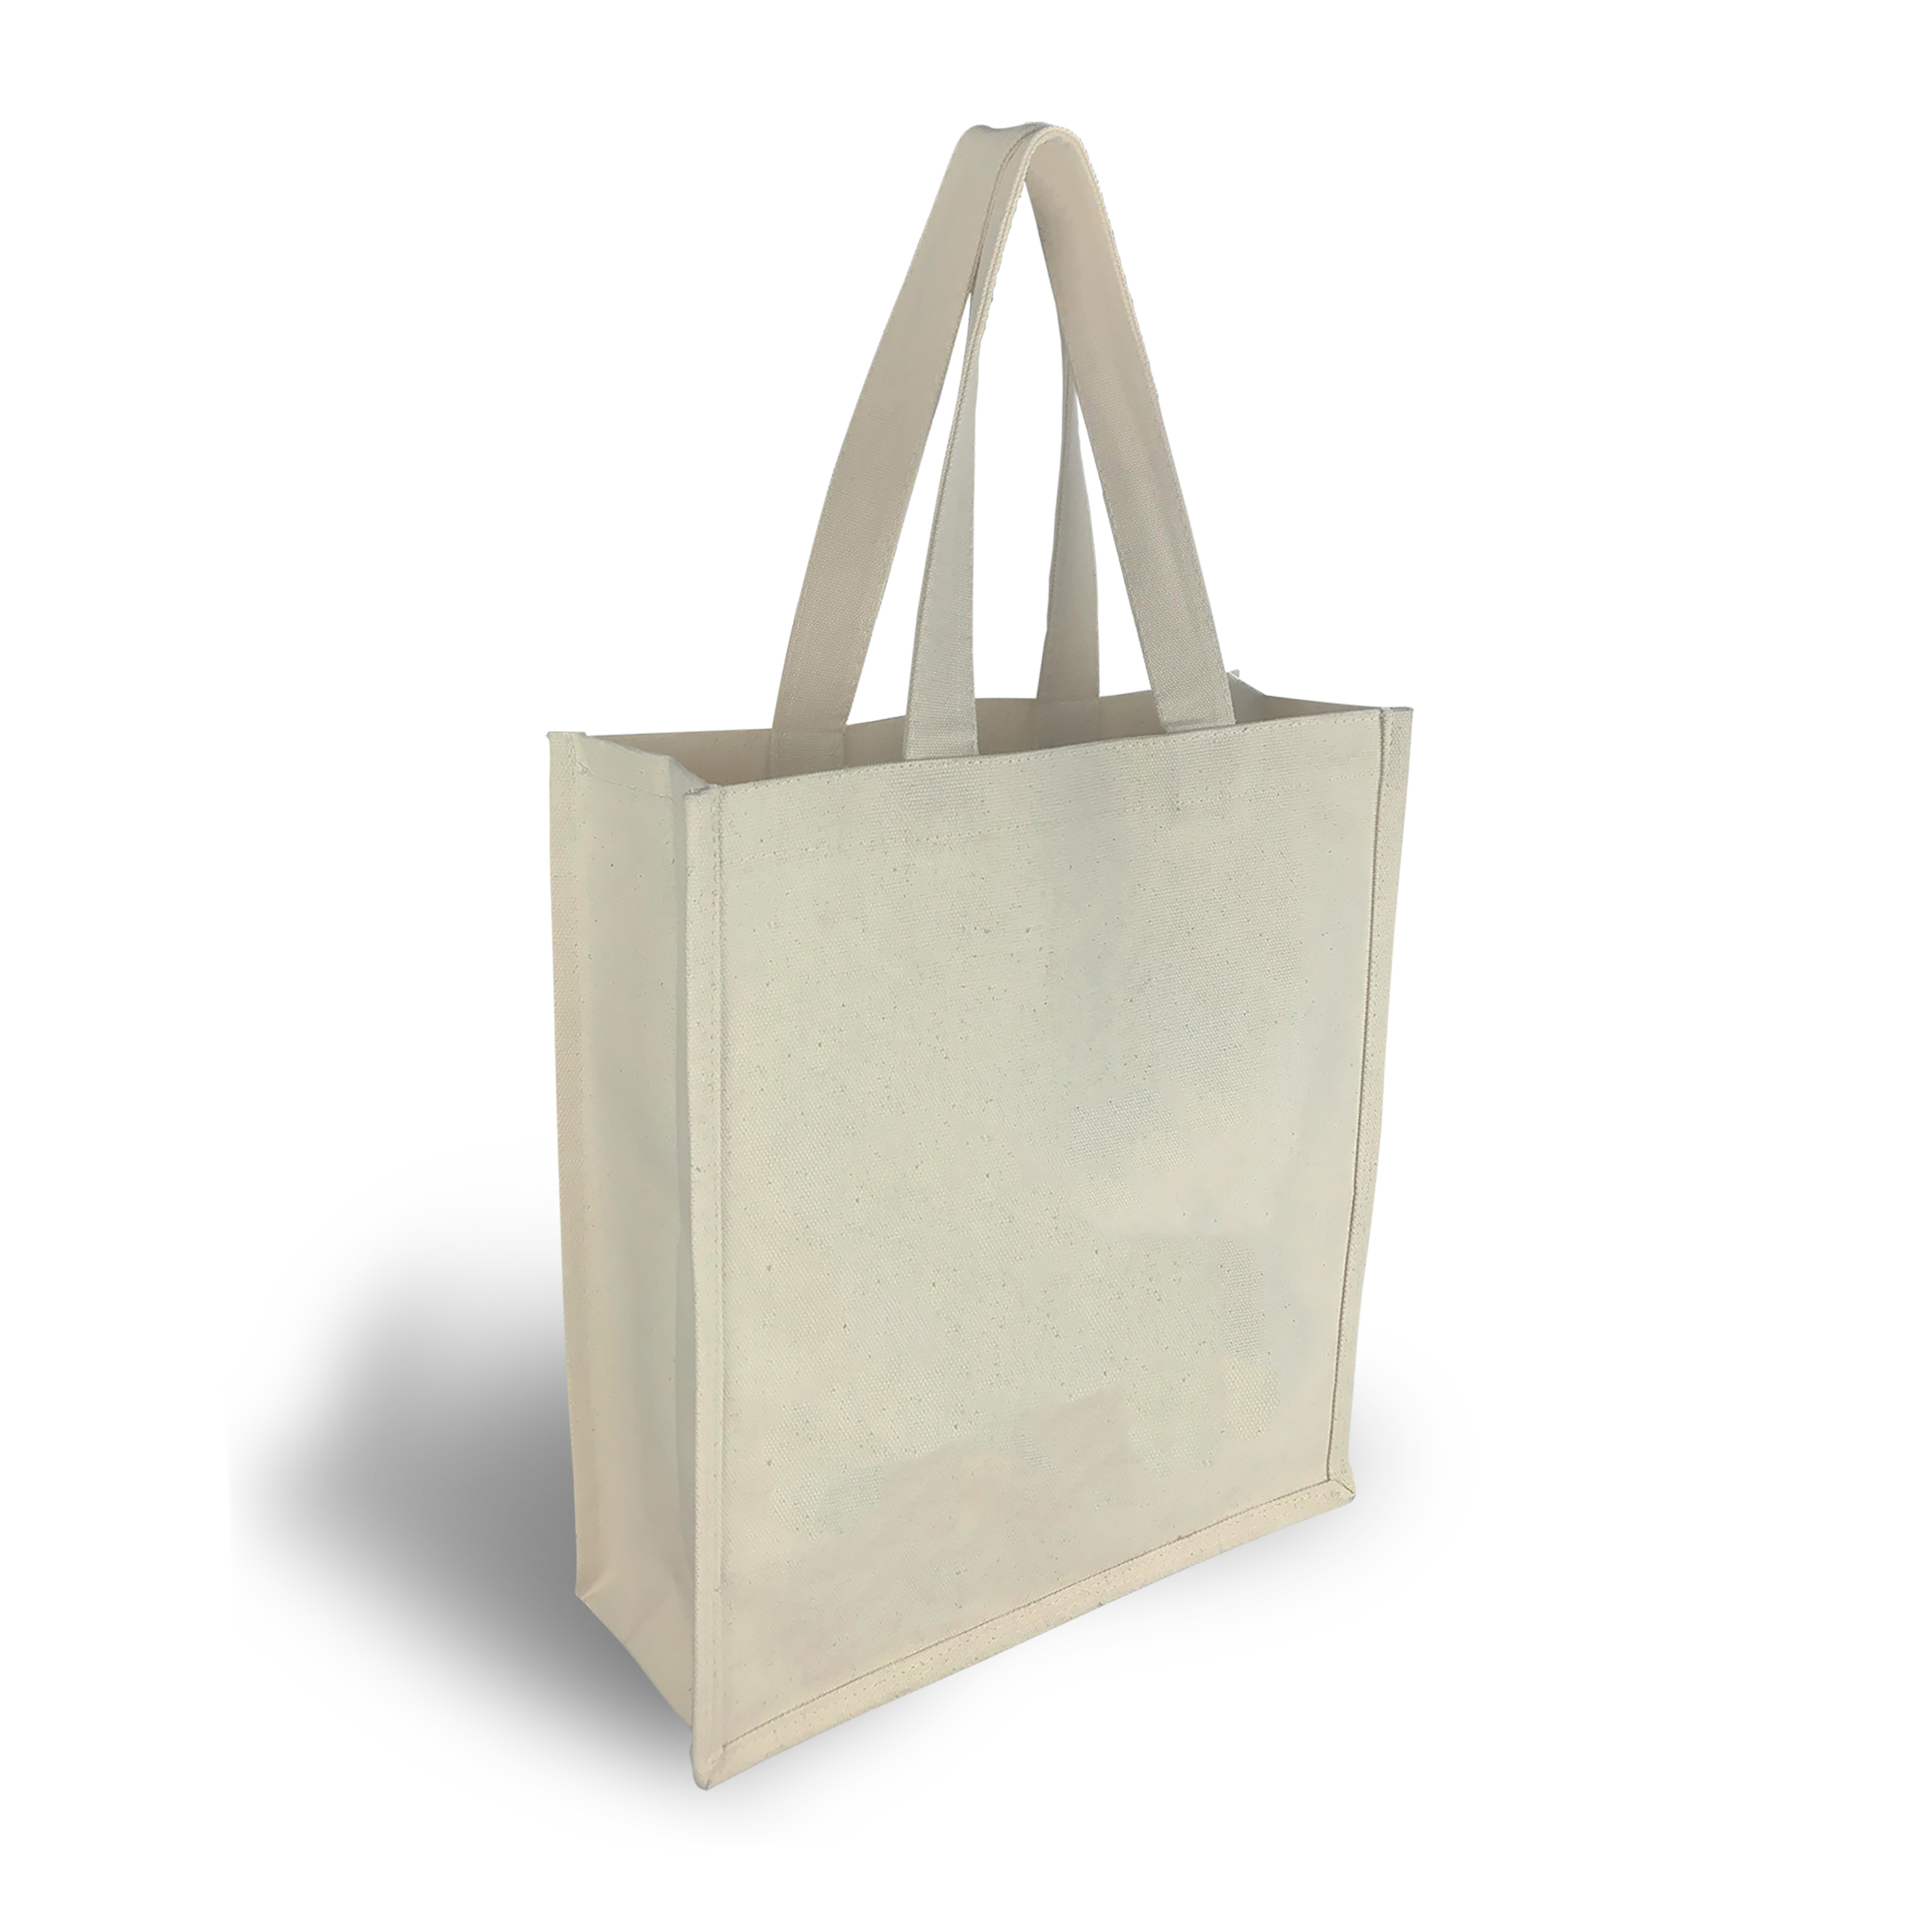 Executive Canvas Tote Bag